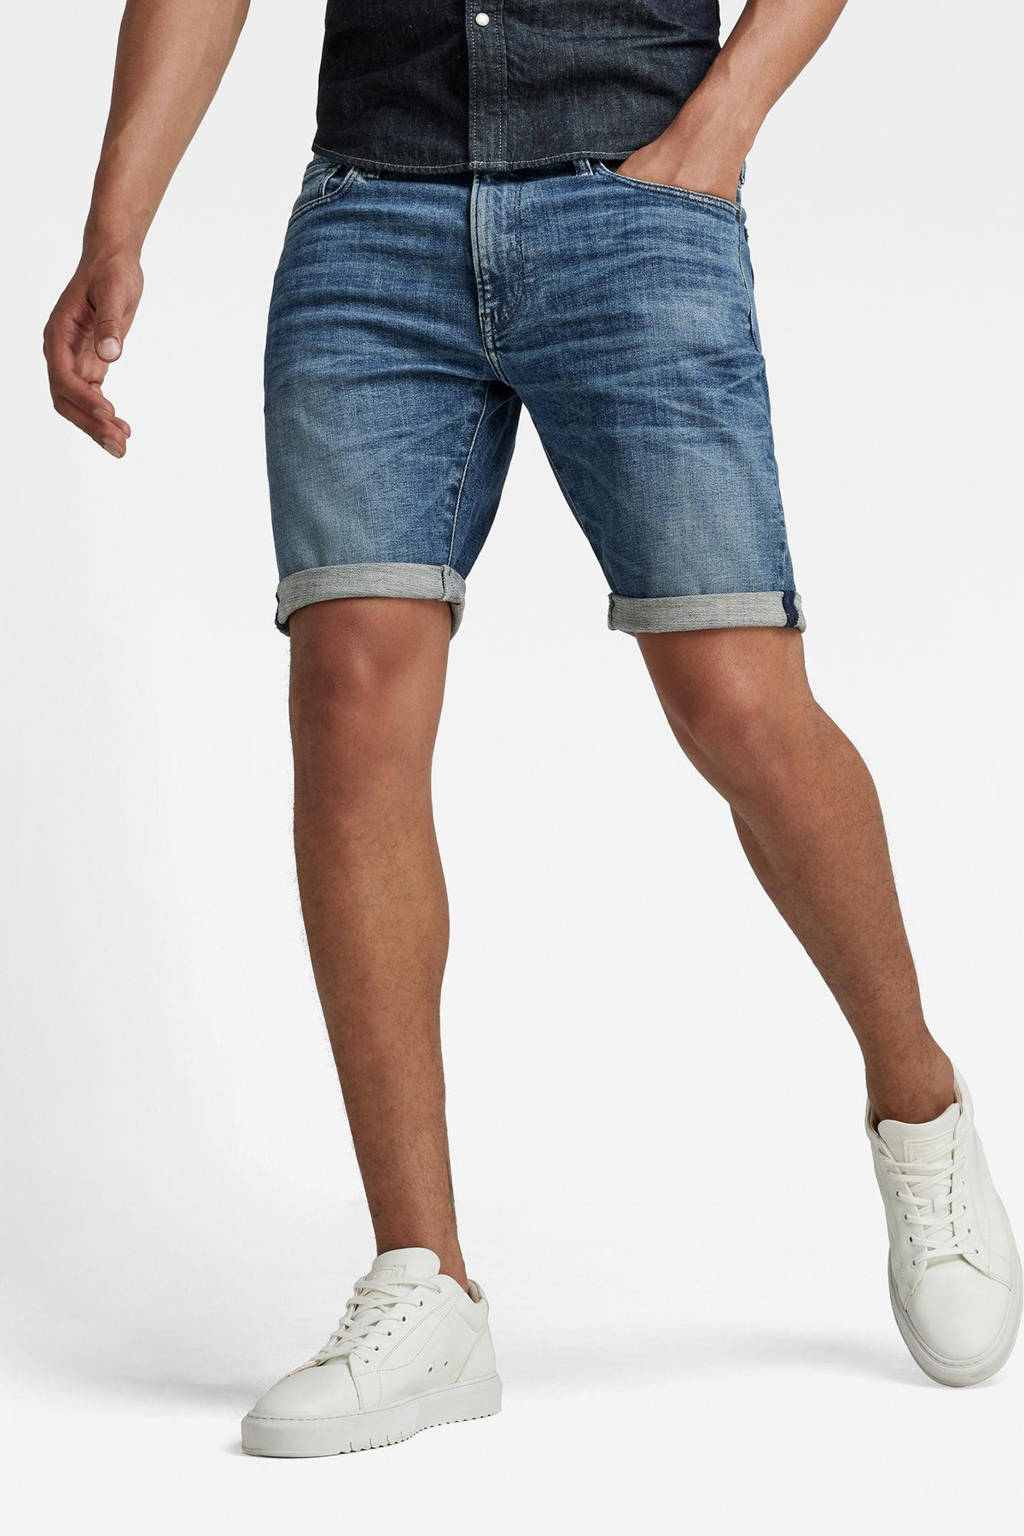 Regeren efficiëntie rommel G-Star RAW 3301 slim fit jeans short faded cascade | wehkamp